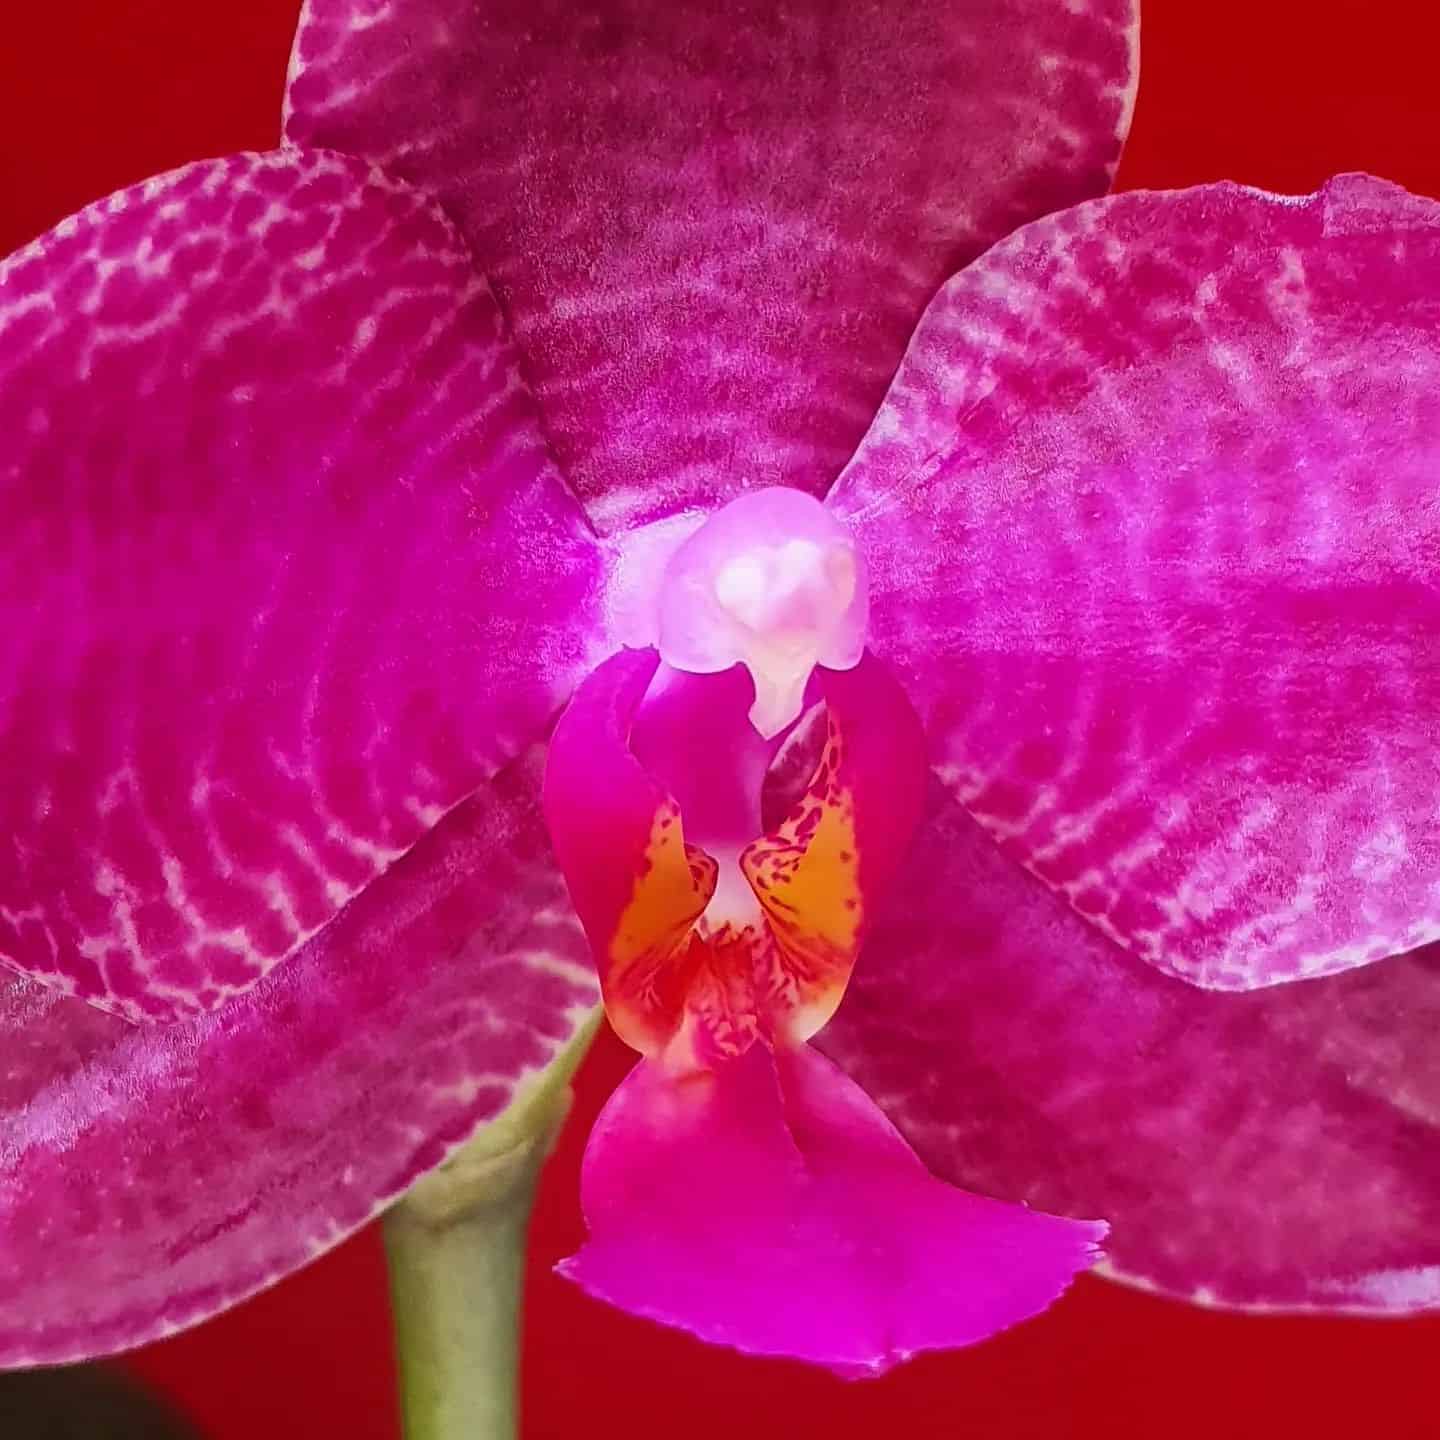 Phal. Black Sentra

#phalaenopsisorchid #phalaenopsis #orchidee #orchidsforsale #orchidinbloom #orchideen #orchideenblüte #orchidlovers #orchidoftheday #orchideenkaufen #orchideenkultur